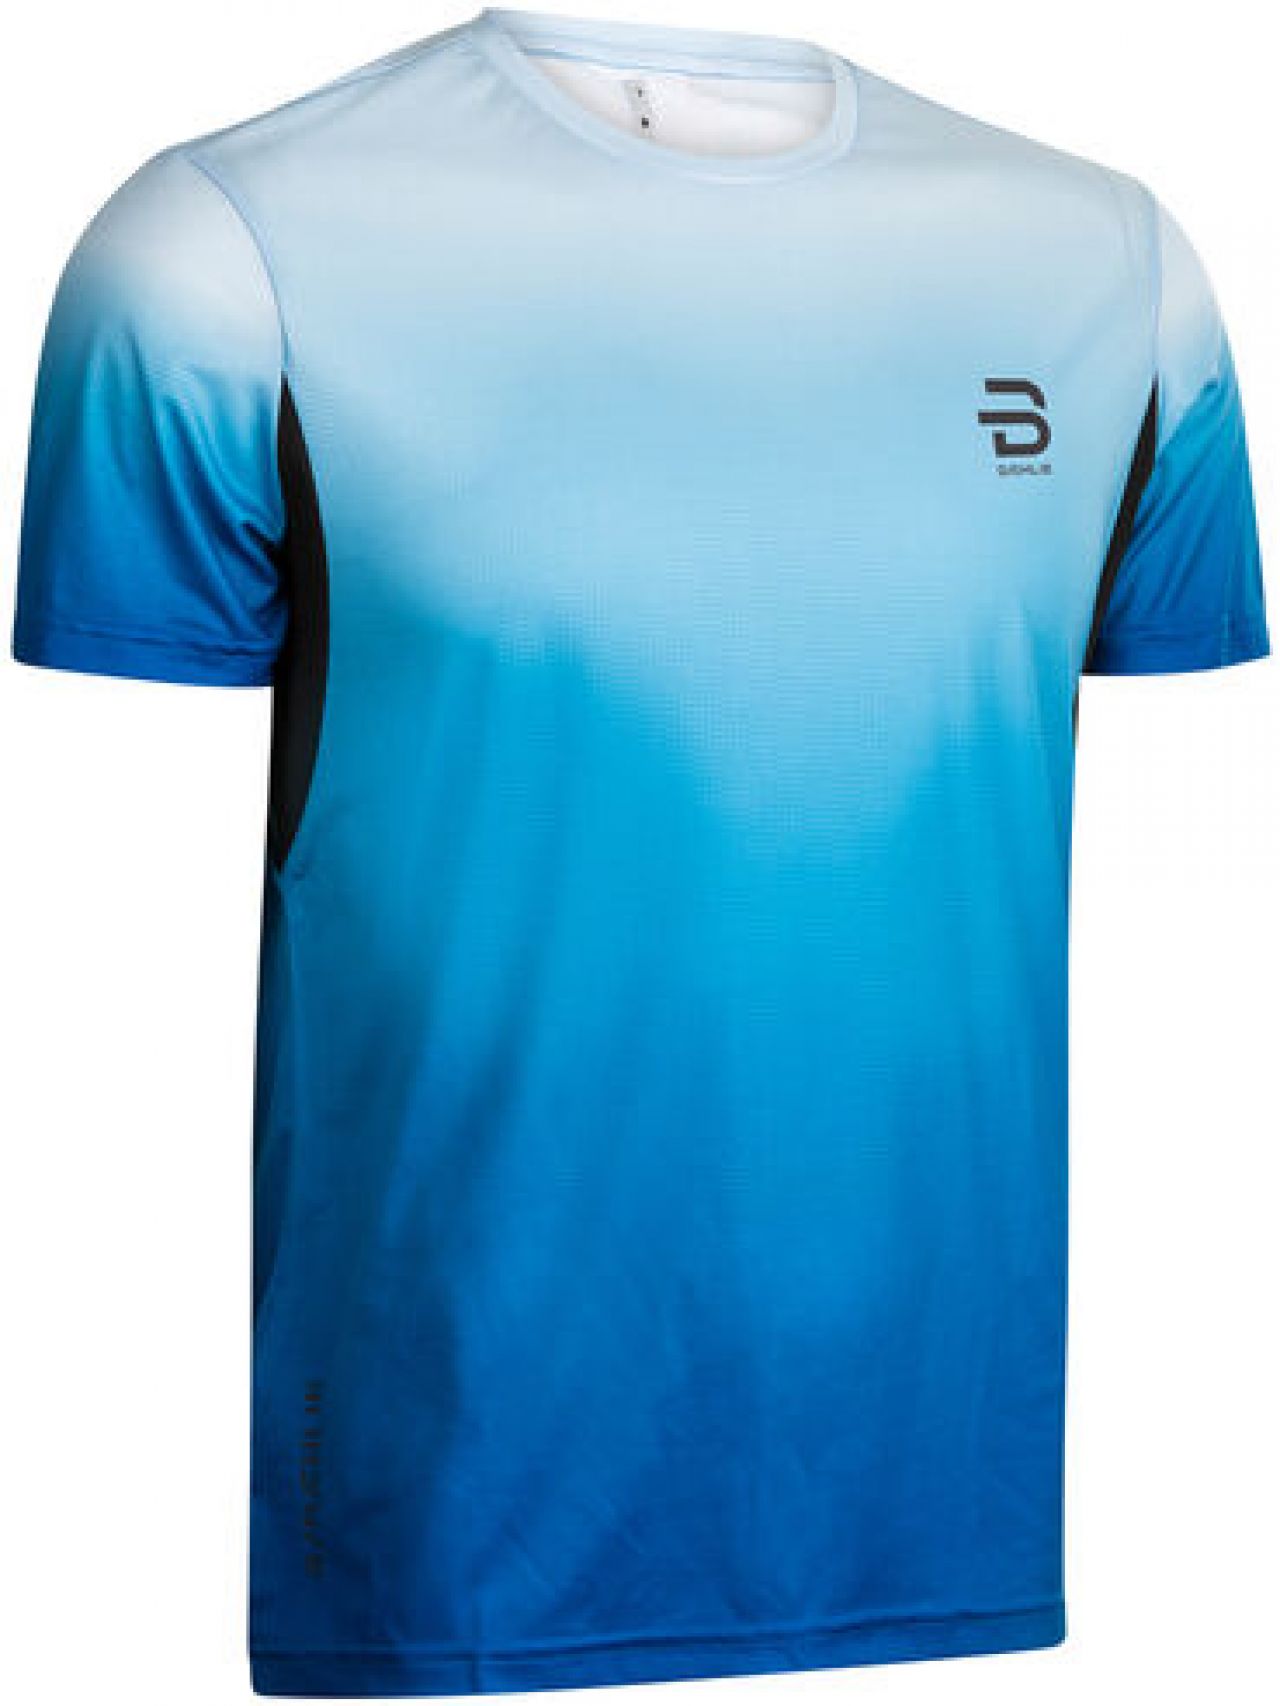 DAEHLIE TEE SHIRT INTENSITY DIRECTOIRE BLUE  tee shirt running